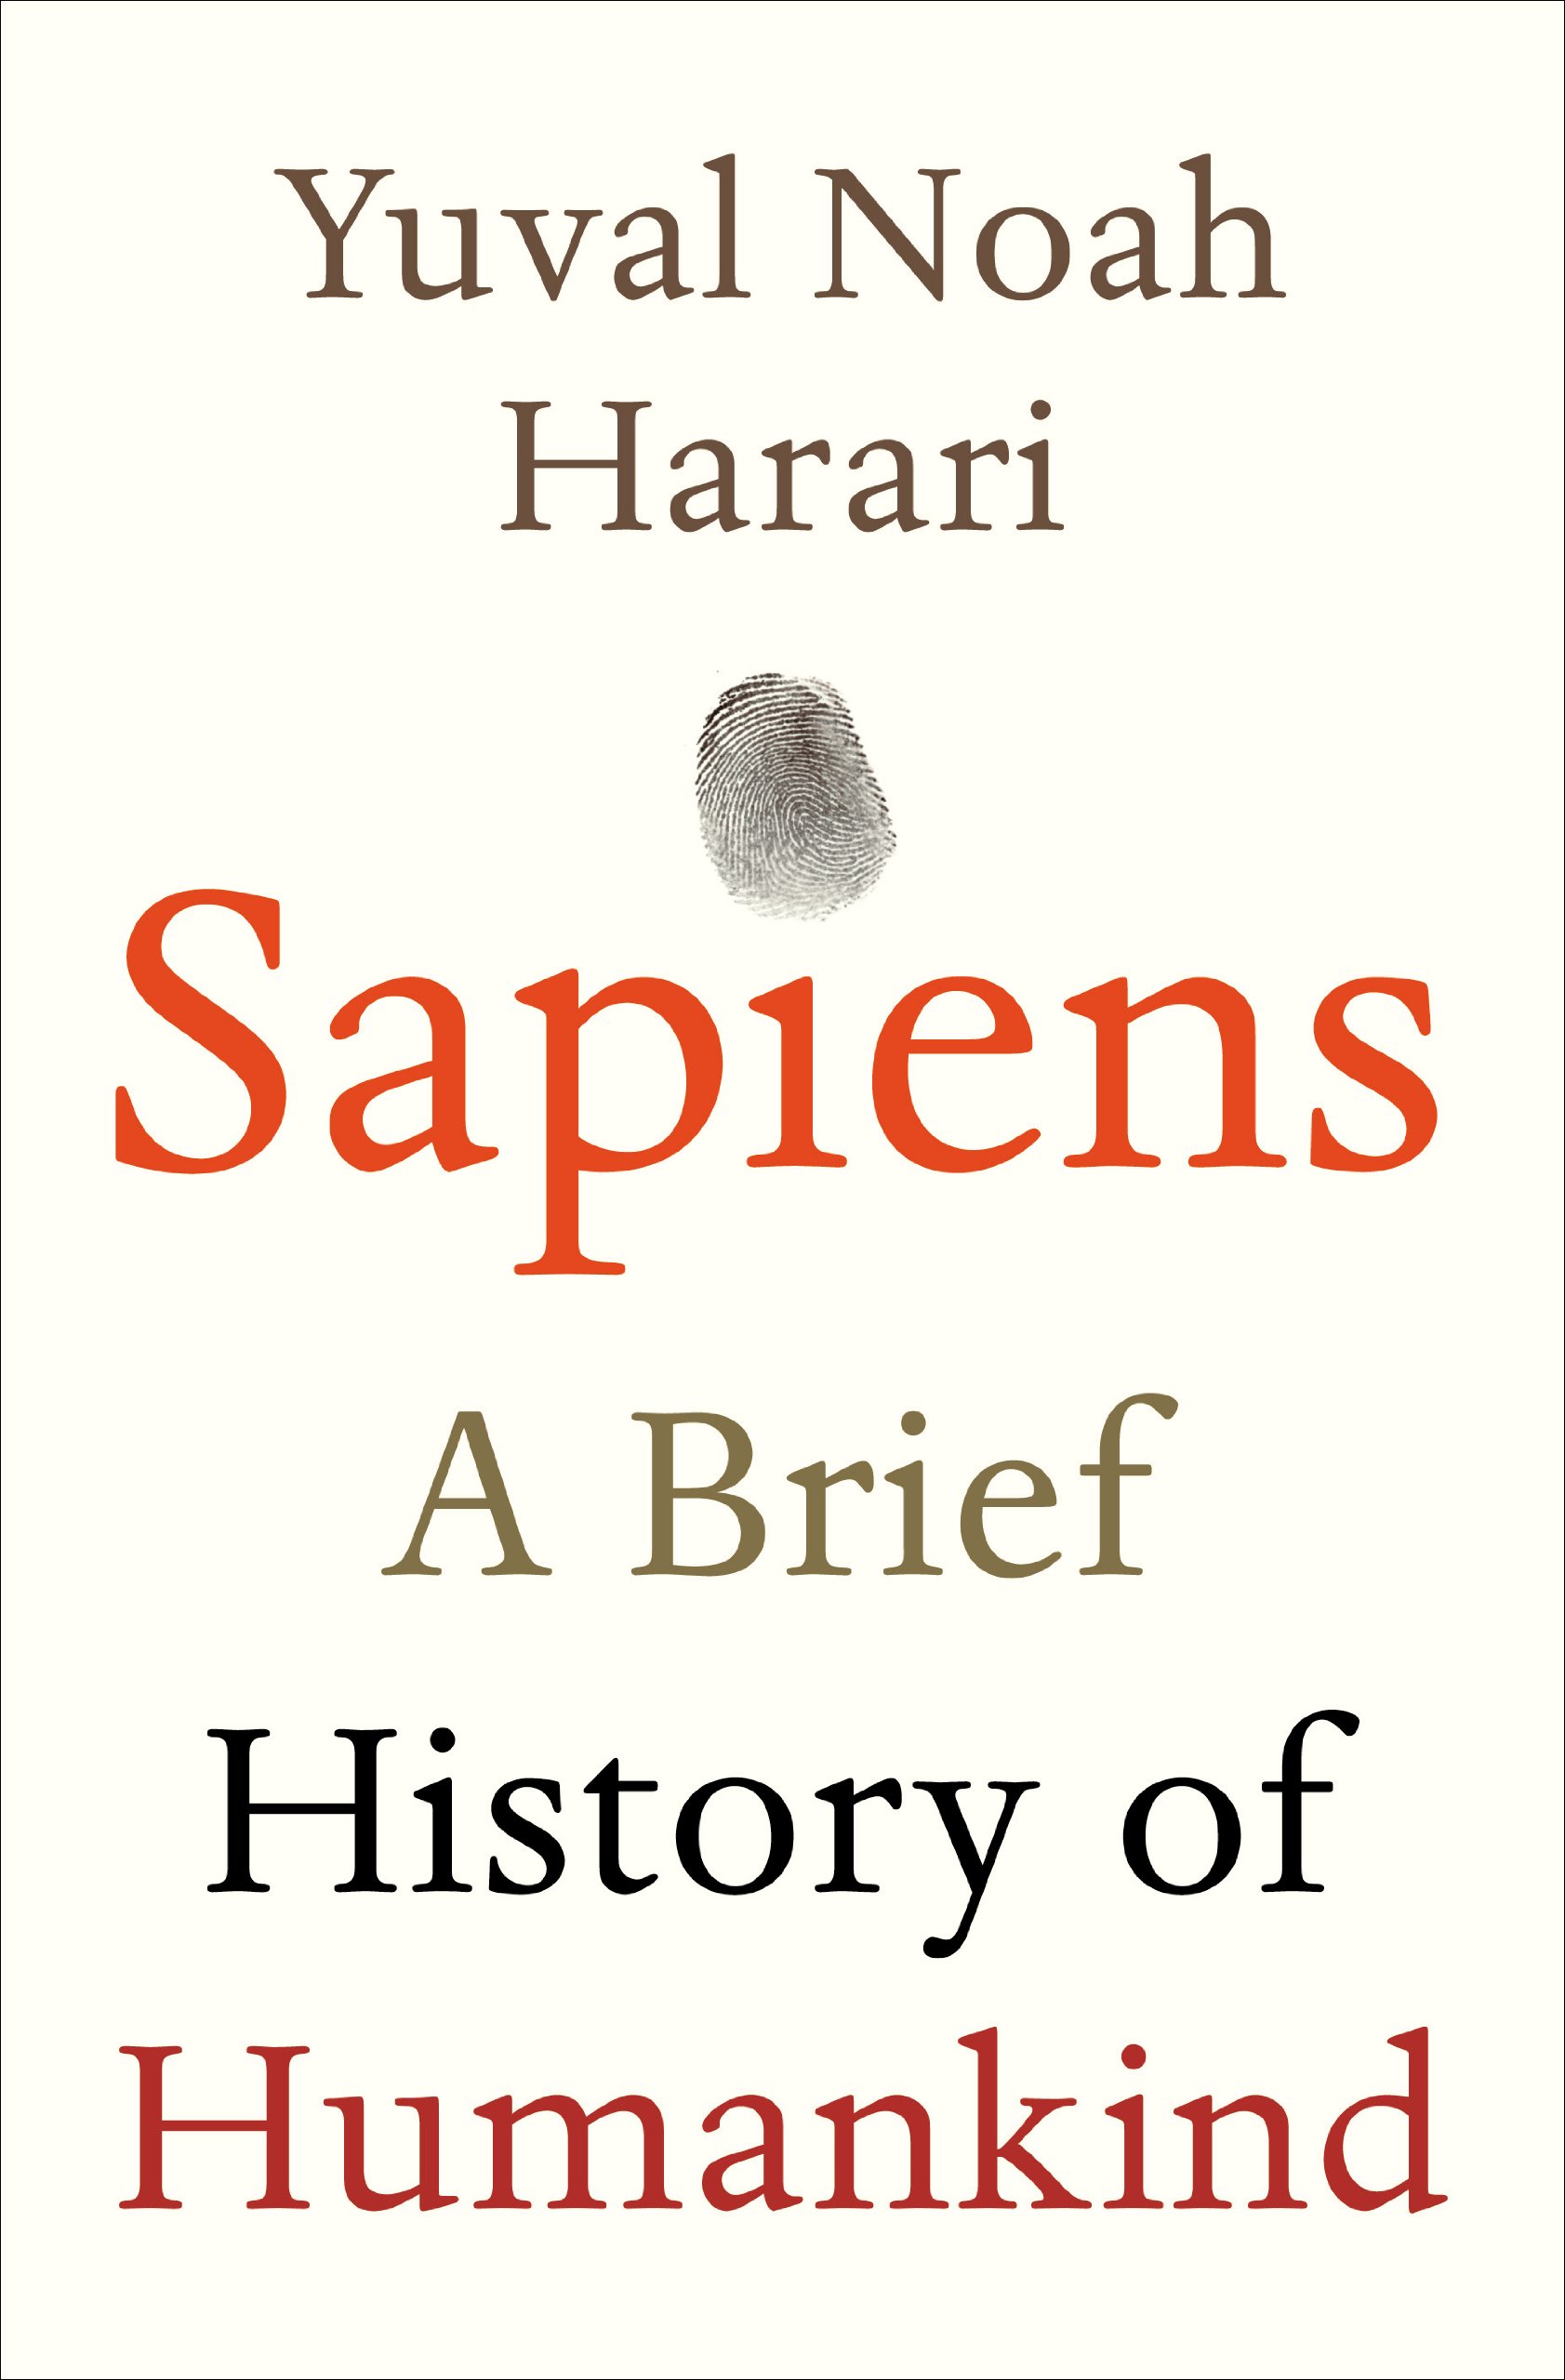 sapiens-book-cover-yuval-noah-harari